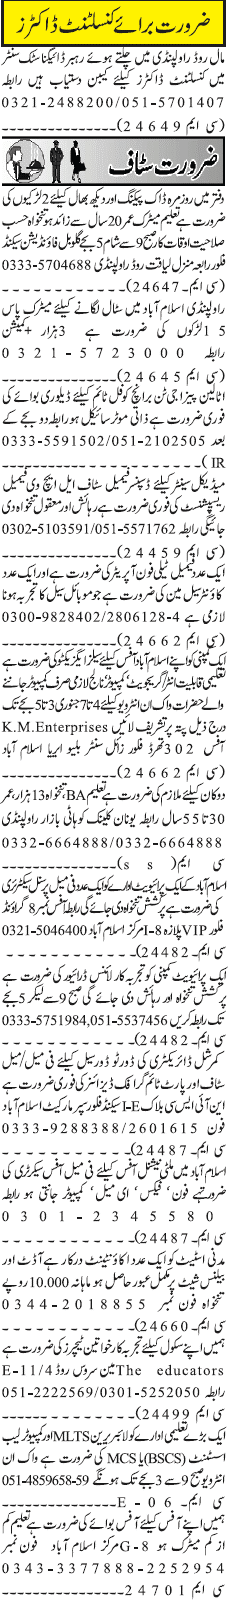 Misc. Jobs in Rawalpindi Jang Classified